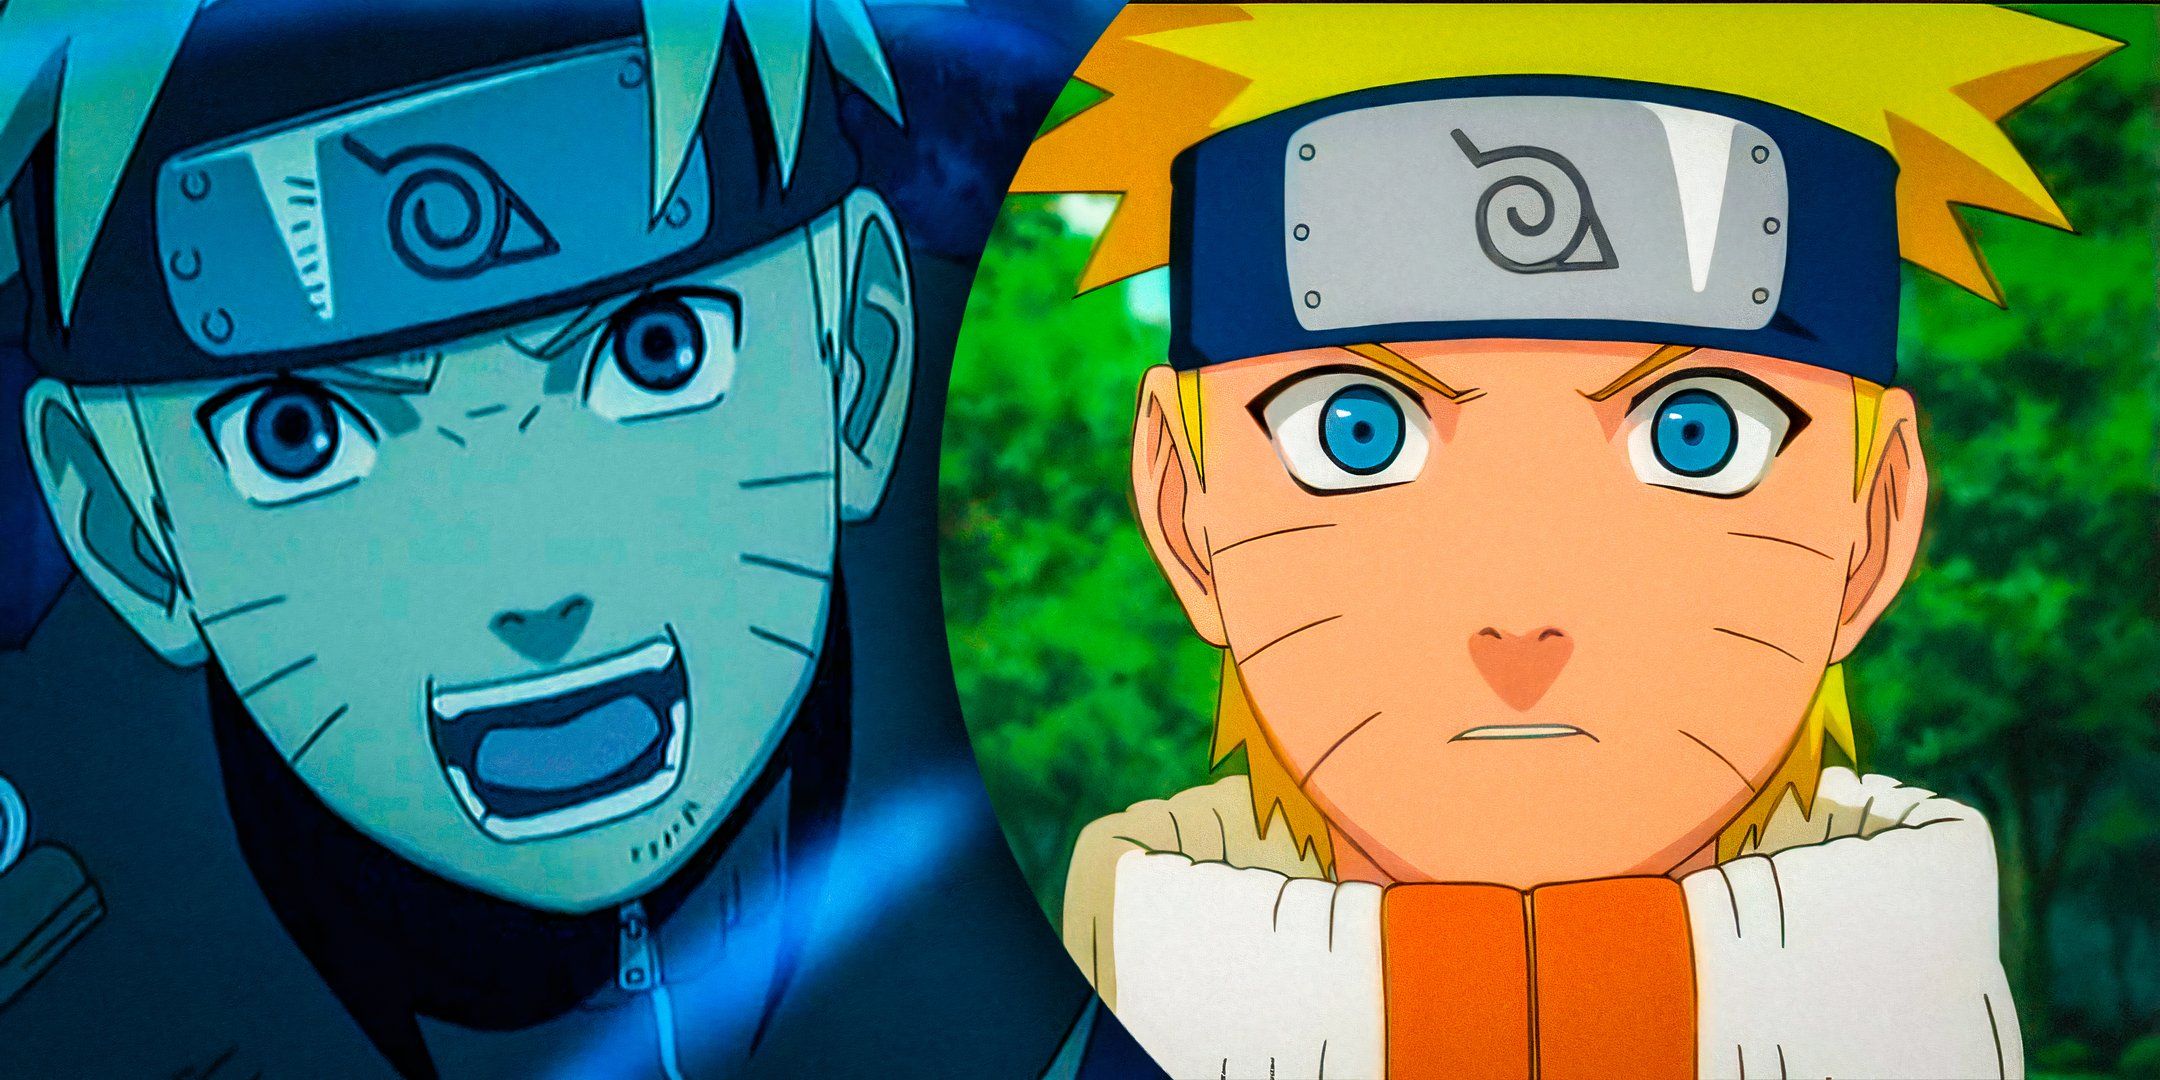 A collage of Naruto from Naruto and Naruto Shippuden.